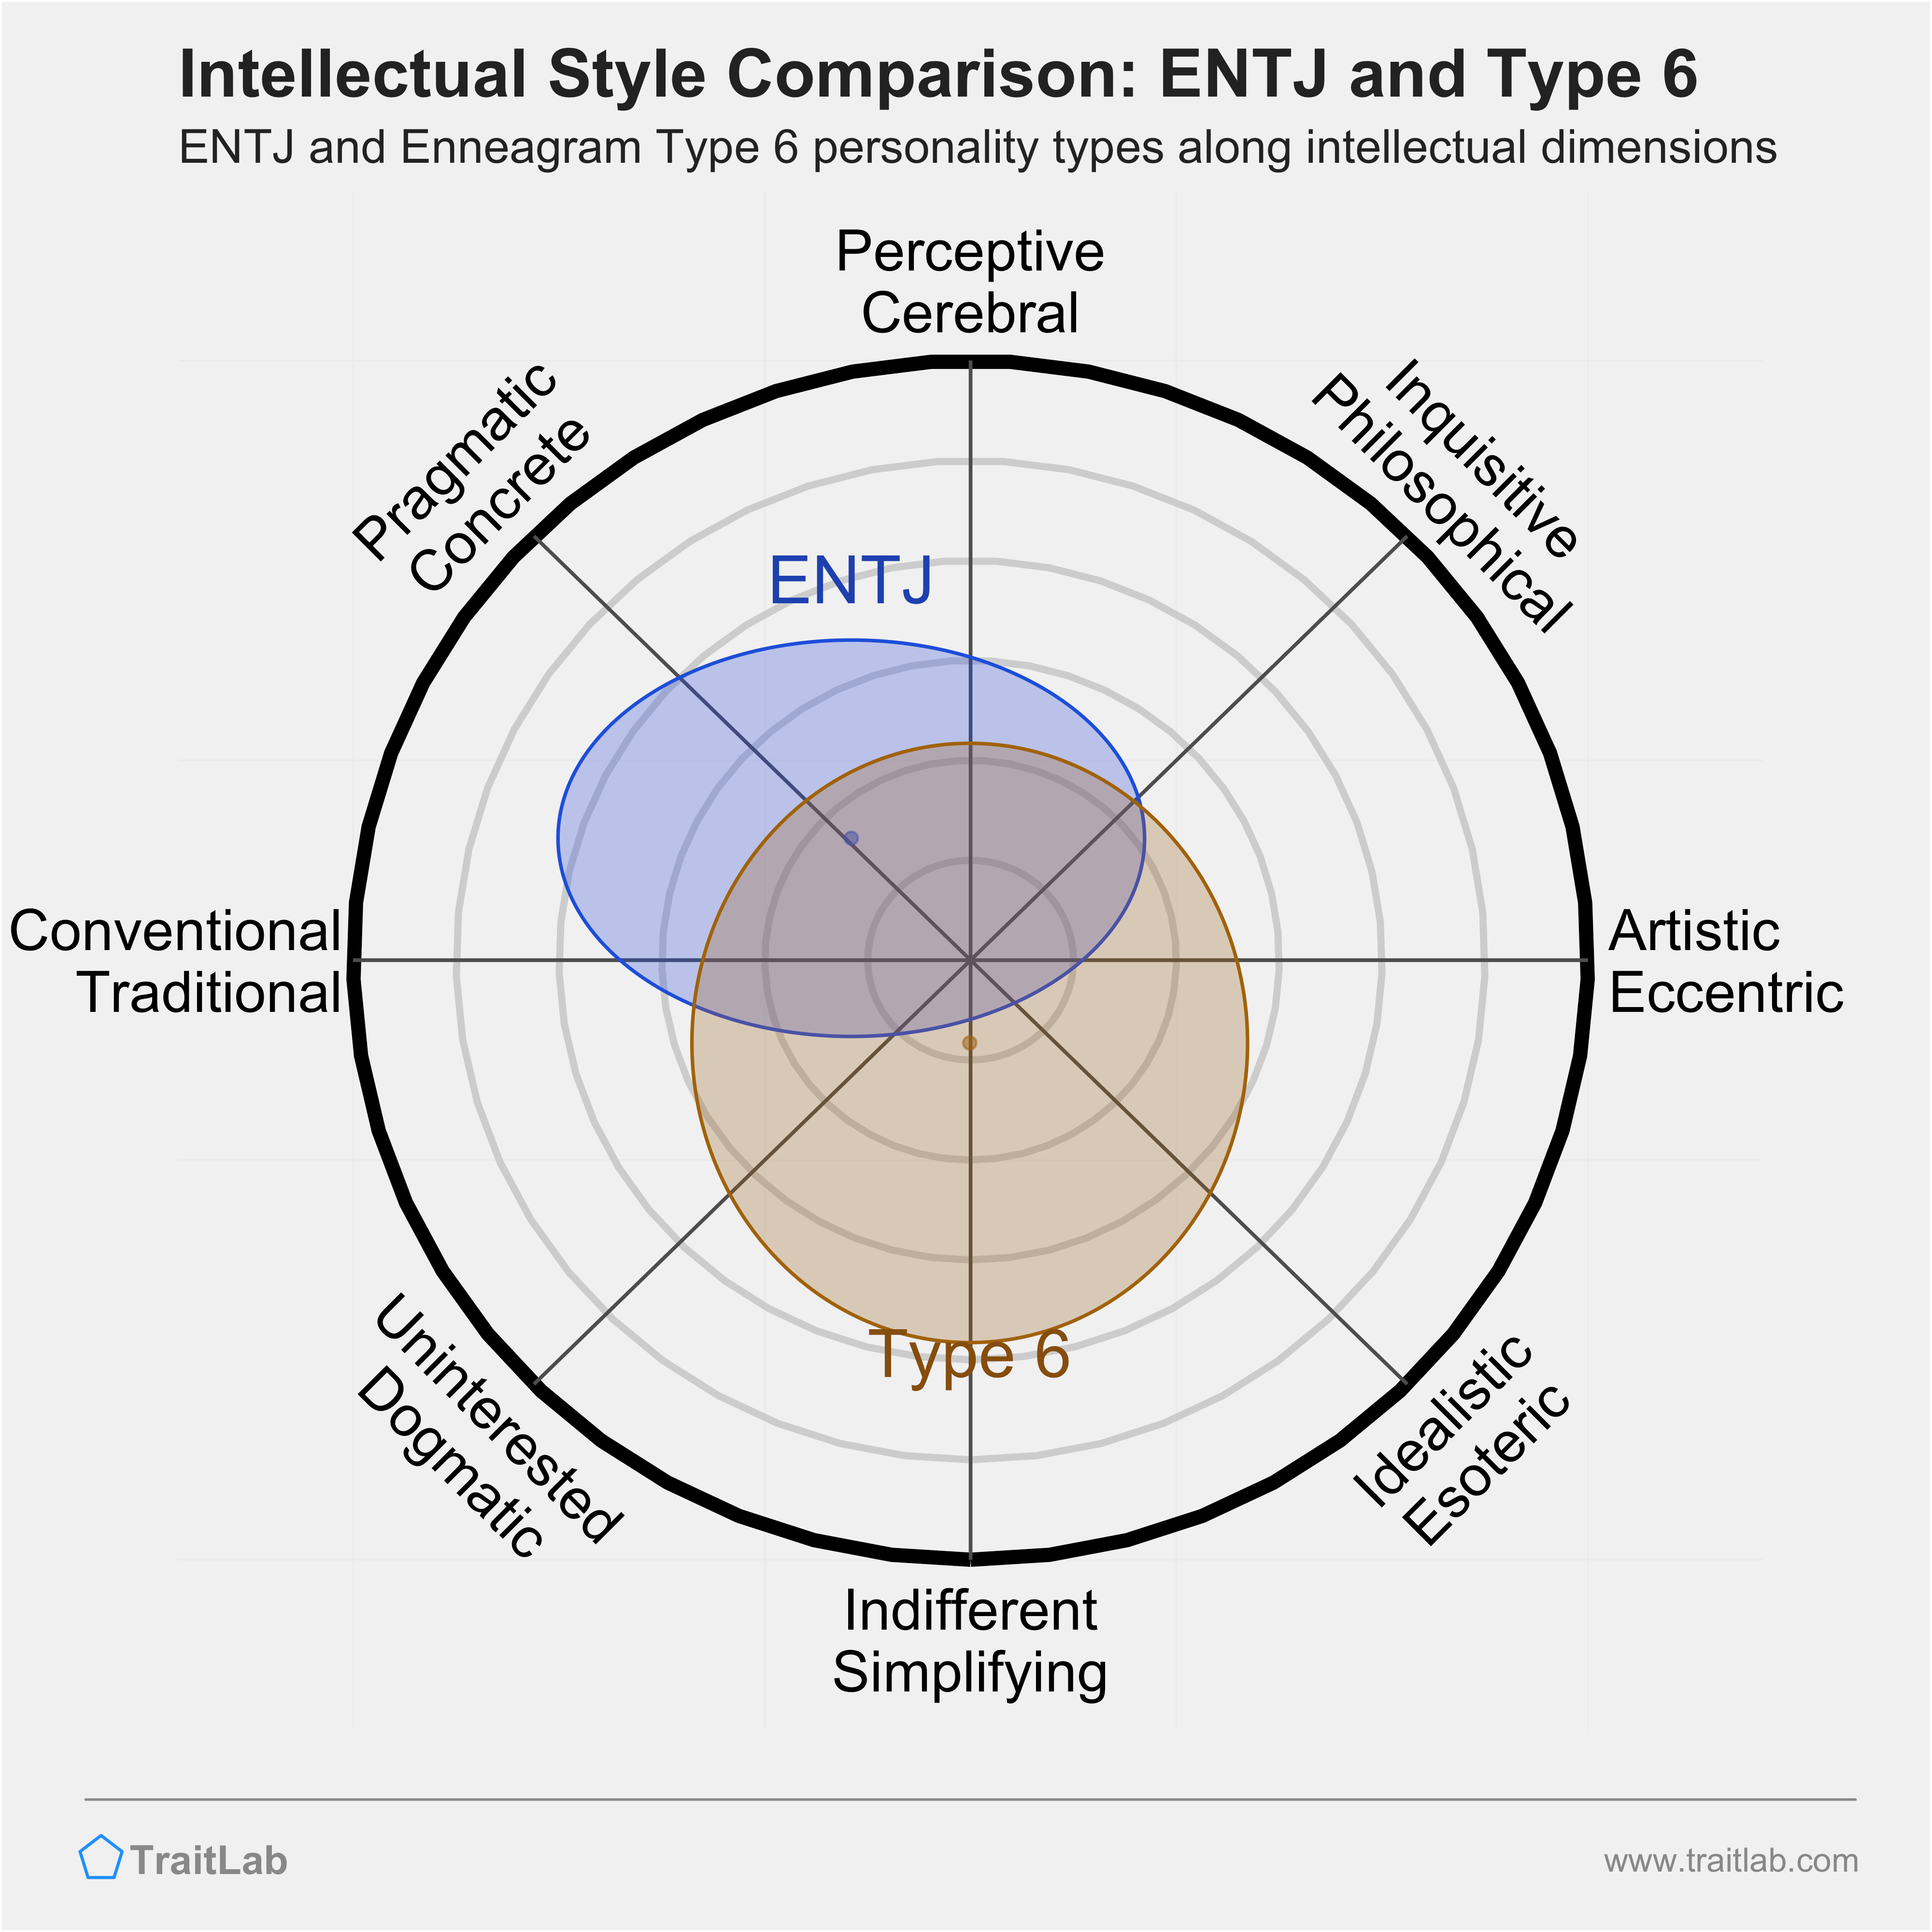 ENTJ and Type 6 comparison across intellectual dimensions